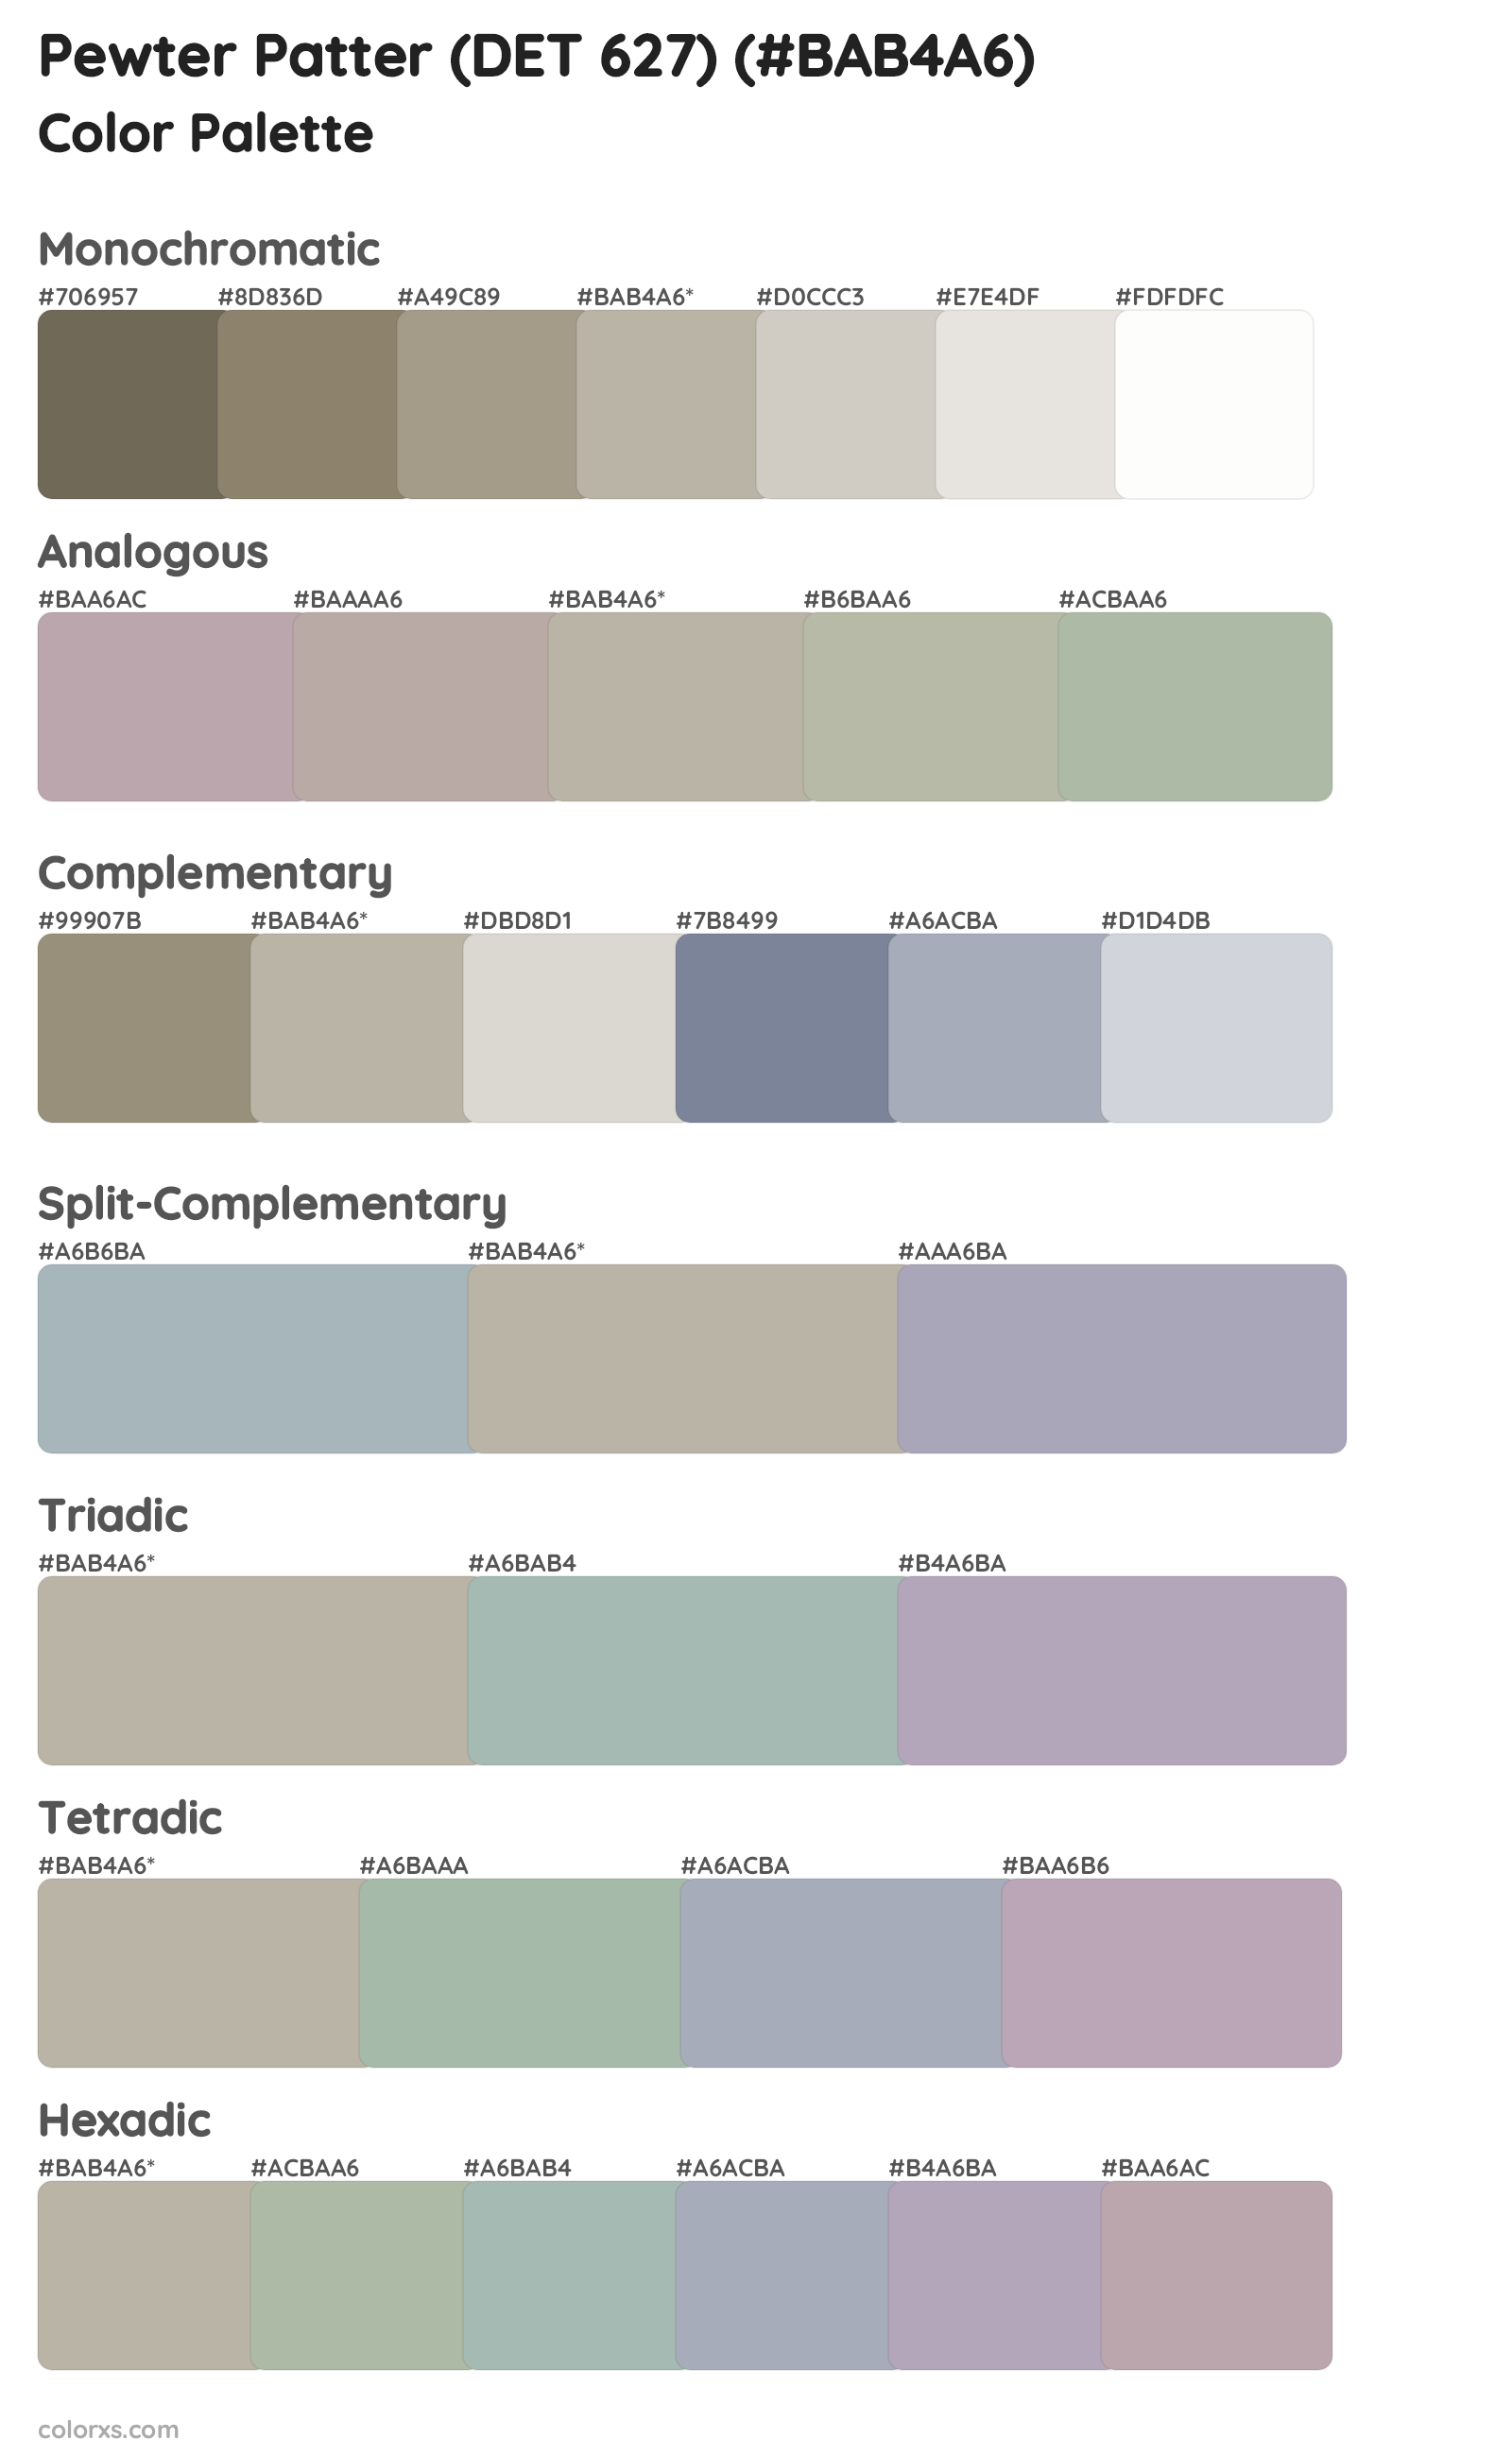 Pewter Patter (DET 627) Color Scheme Palettes